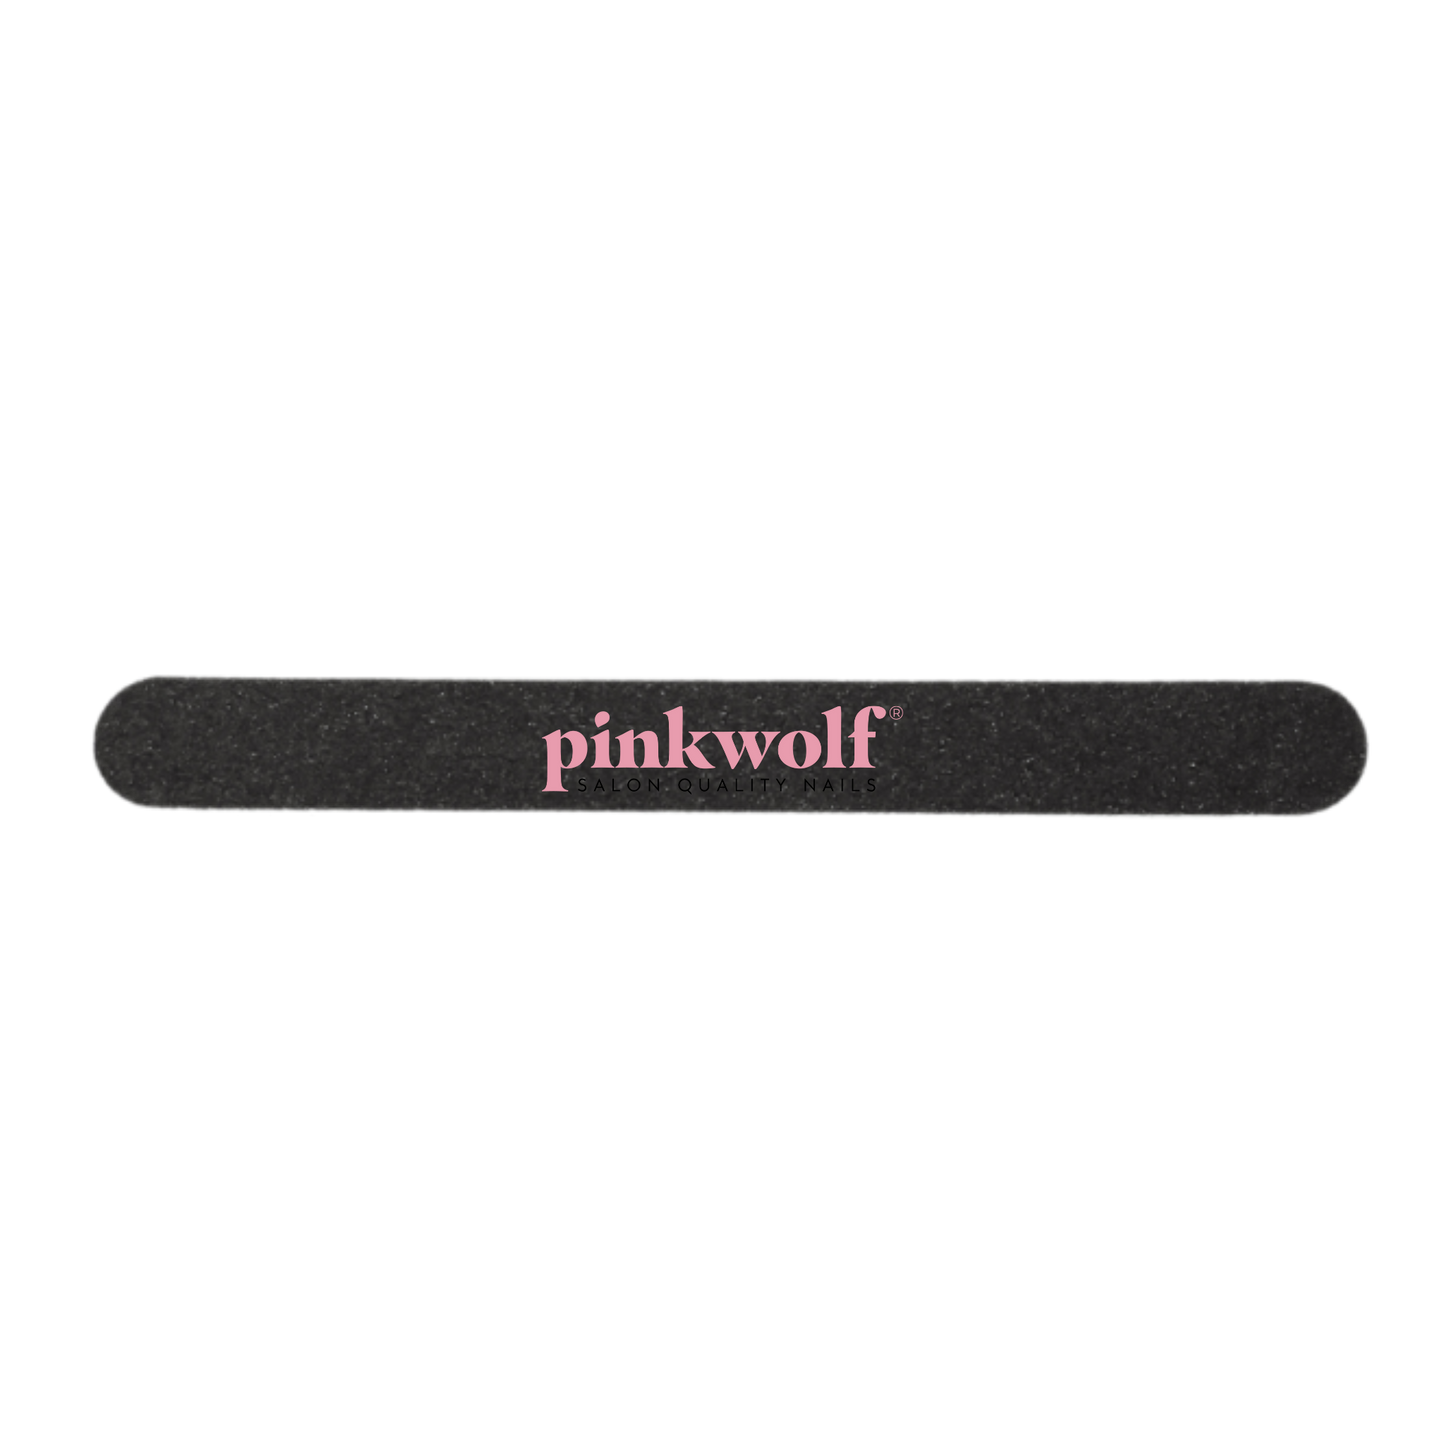 Pinkwolf nail file